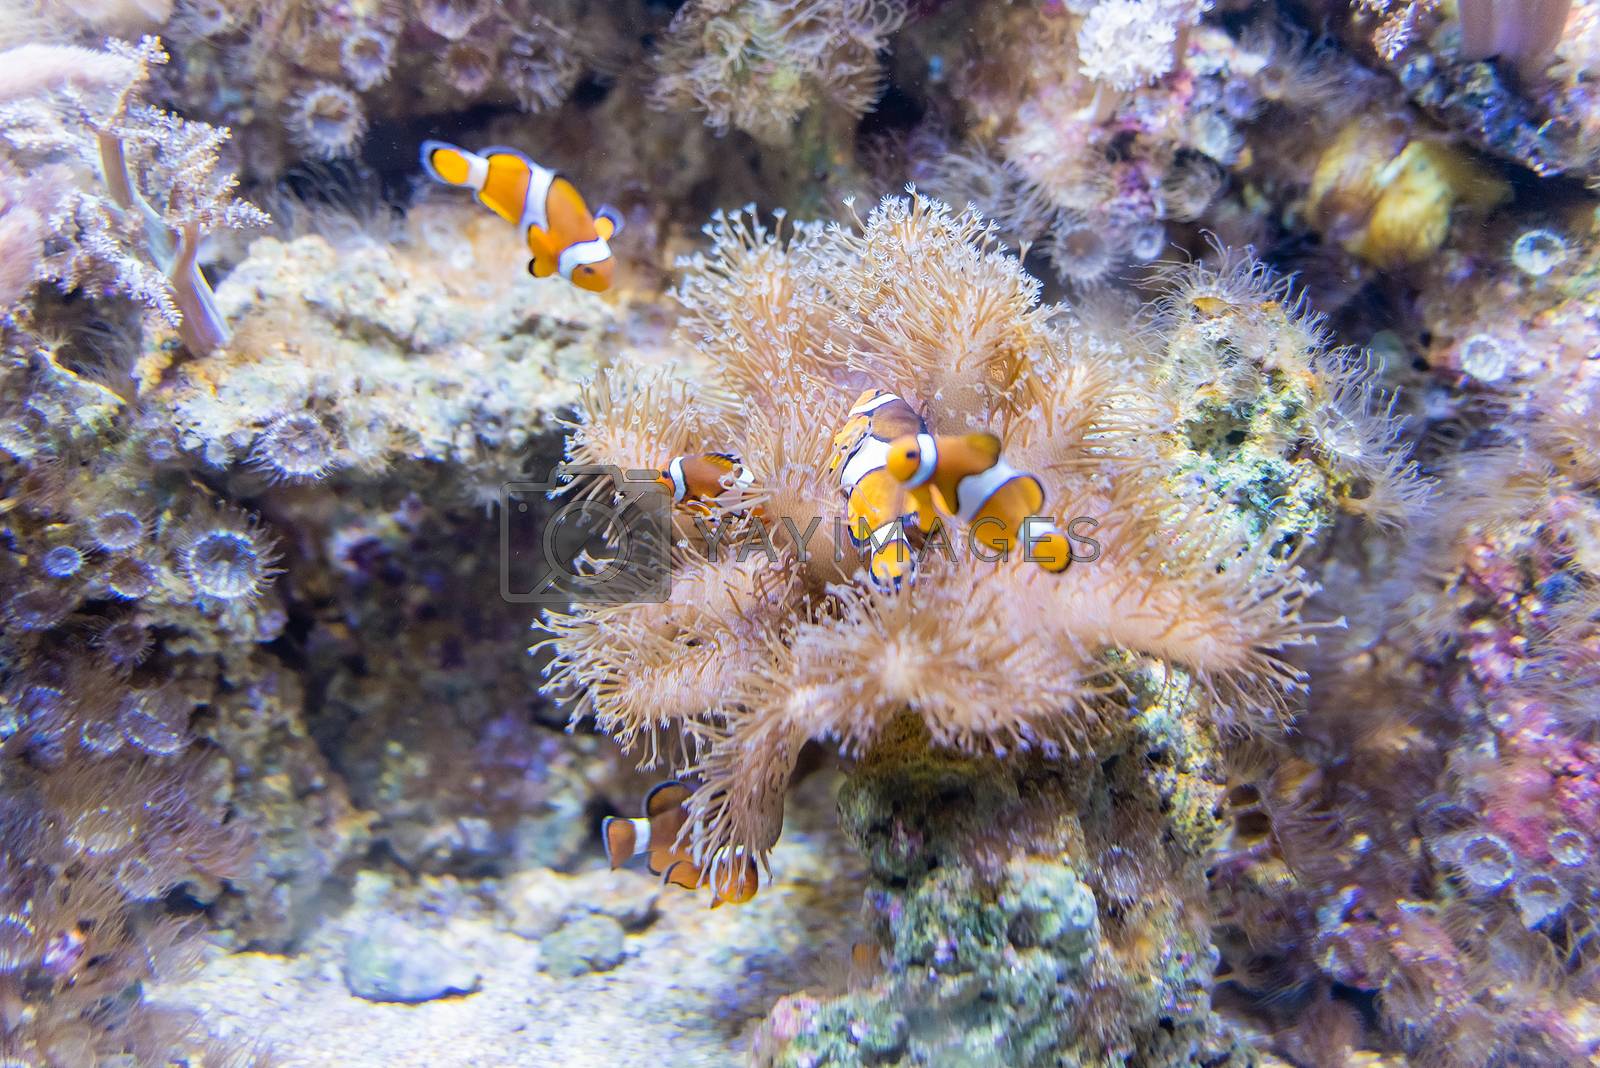 Royalty free image of Closeup of clownfishes in aquarium environment by marcorubino